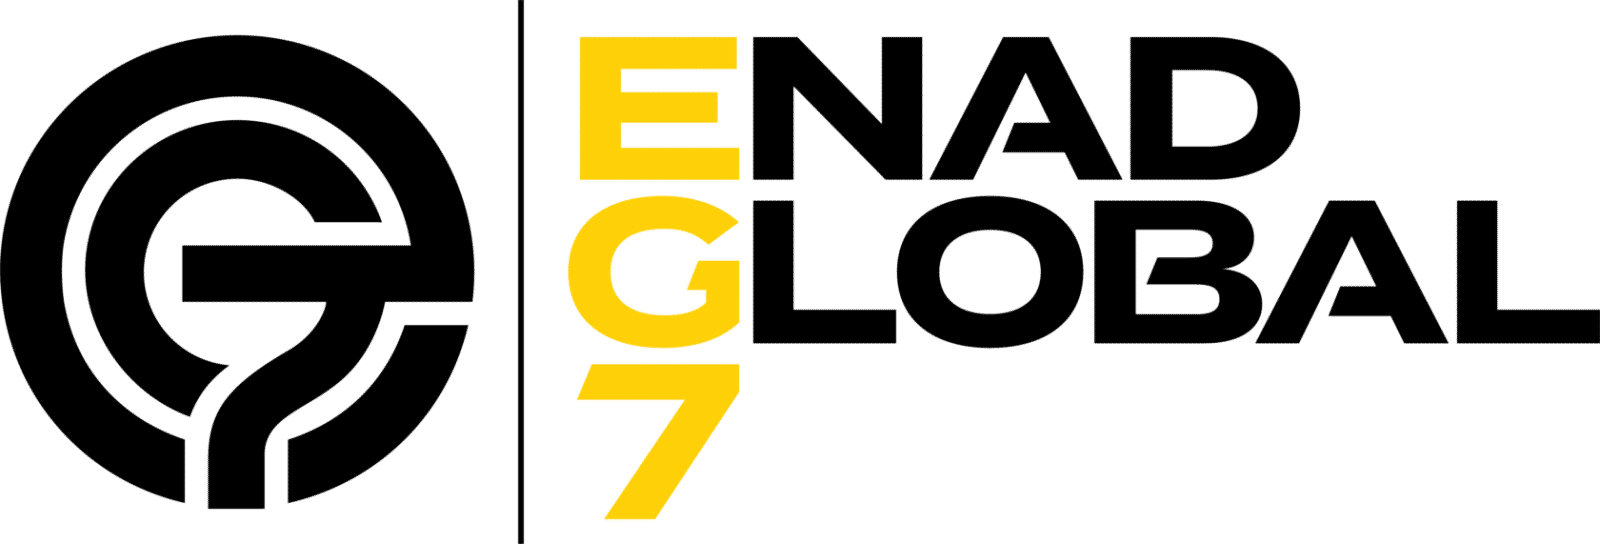 Enad Global 7 logo